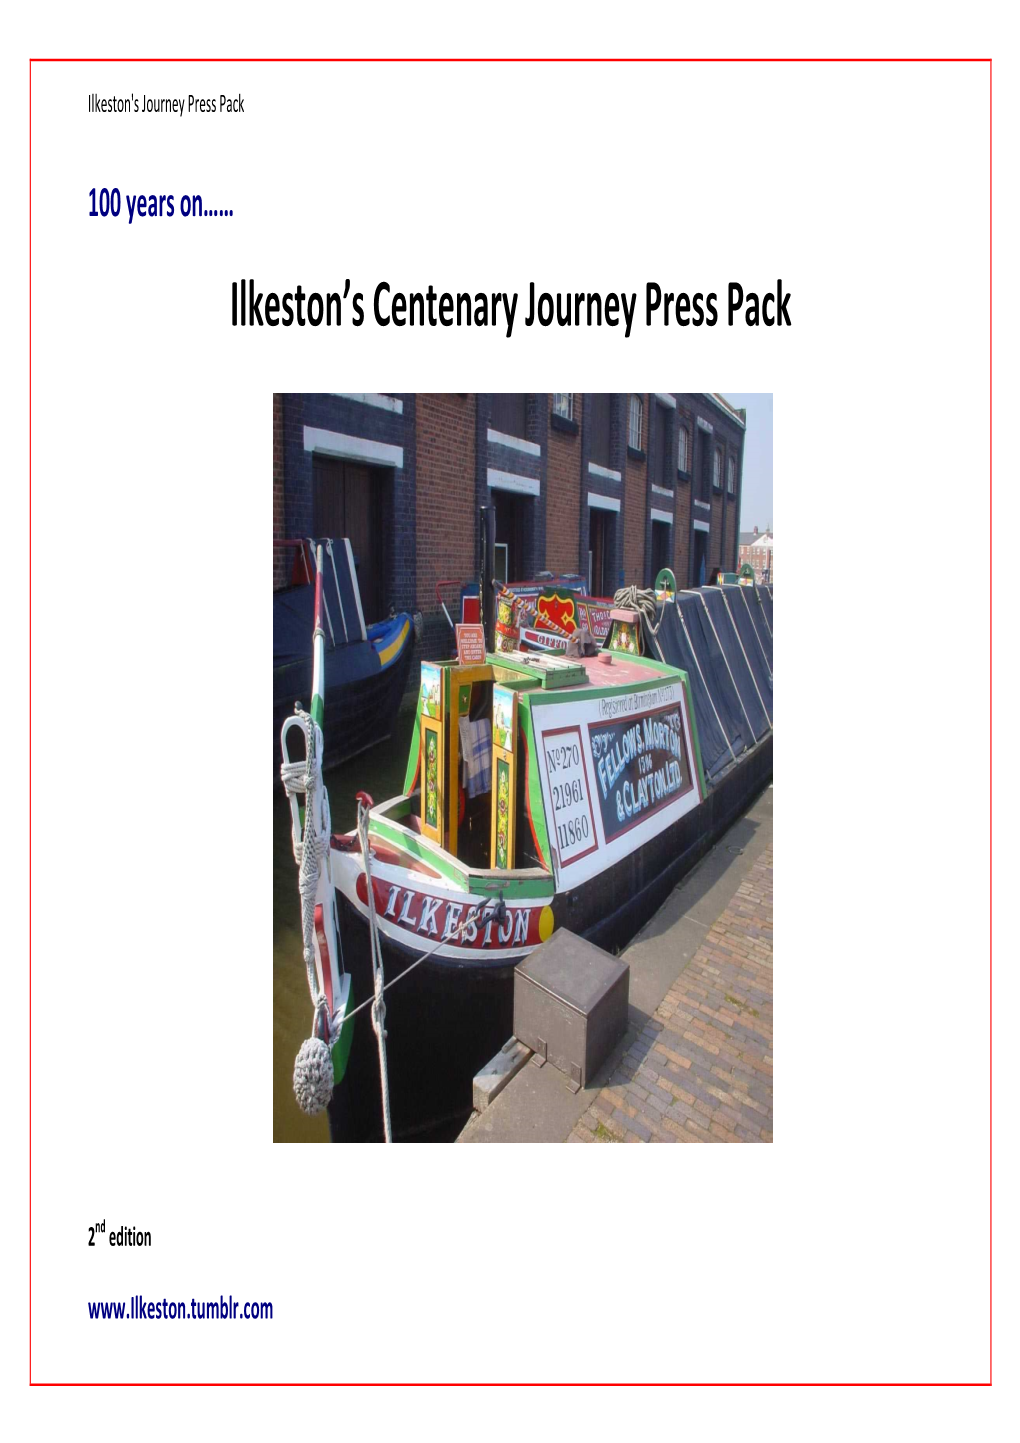 Ilkeston's Centenary Journey Press Pack